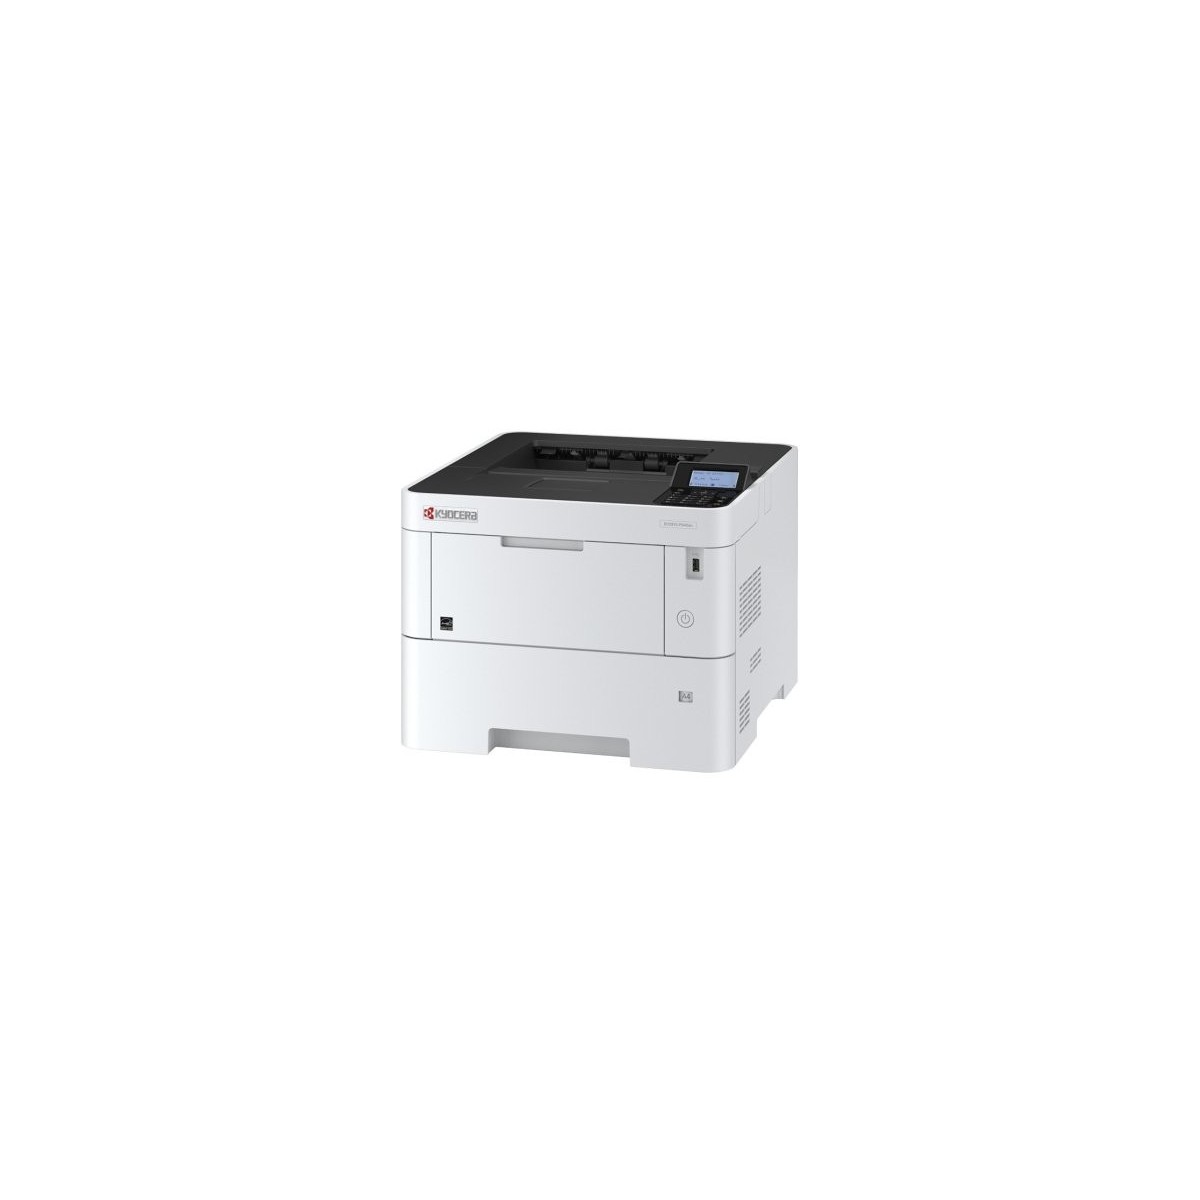 Kyocera ECOSYS P3145dn - Laser - 1200 x 1200 DPI - A4 - 45 ppm - Duplex printing - Network ready